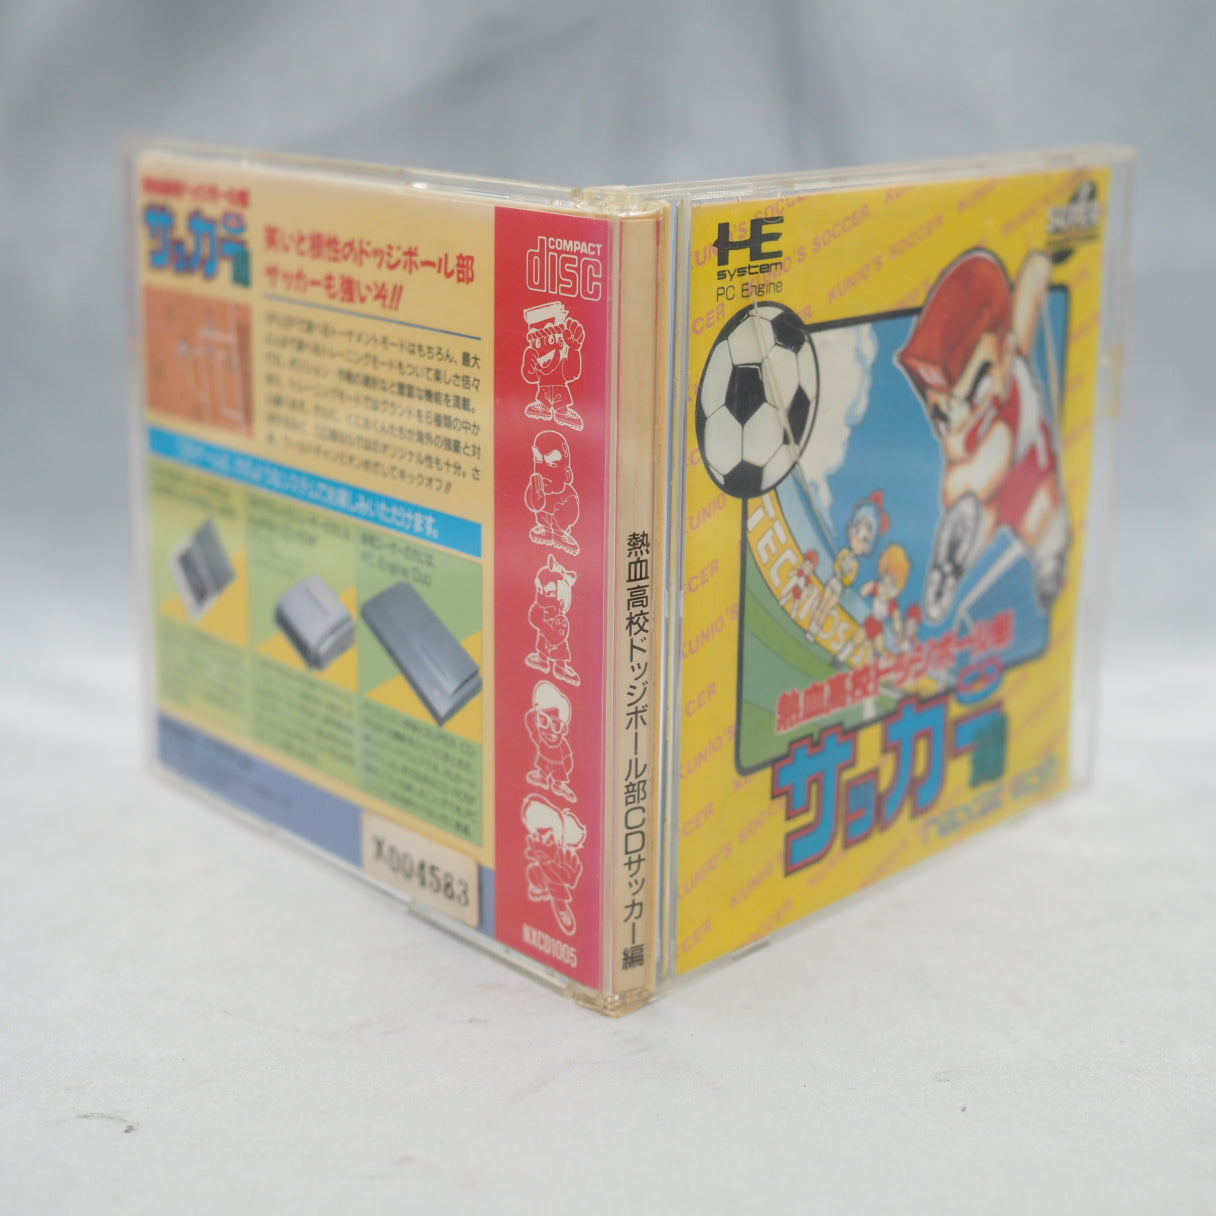 Nekketsu High School Dodgeball Club CD Soccer Edition